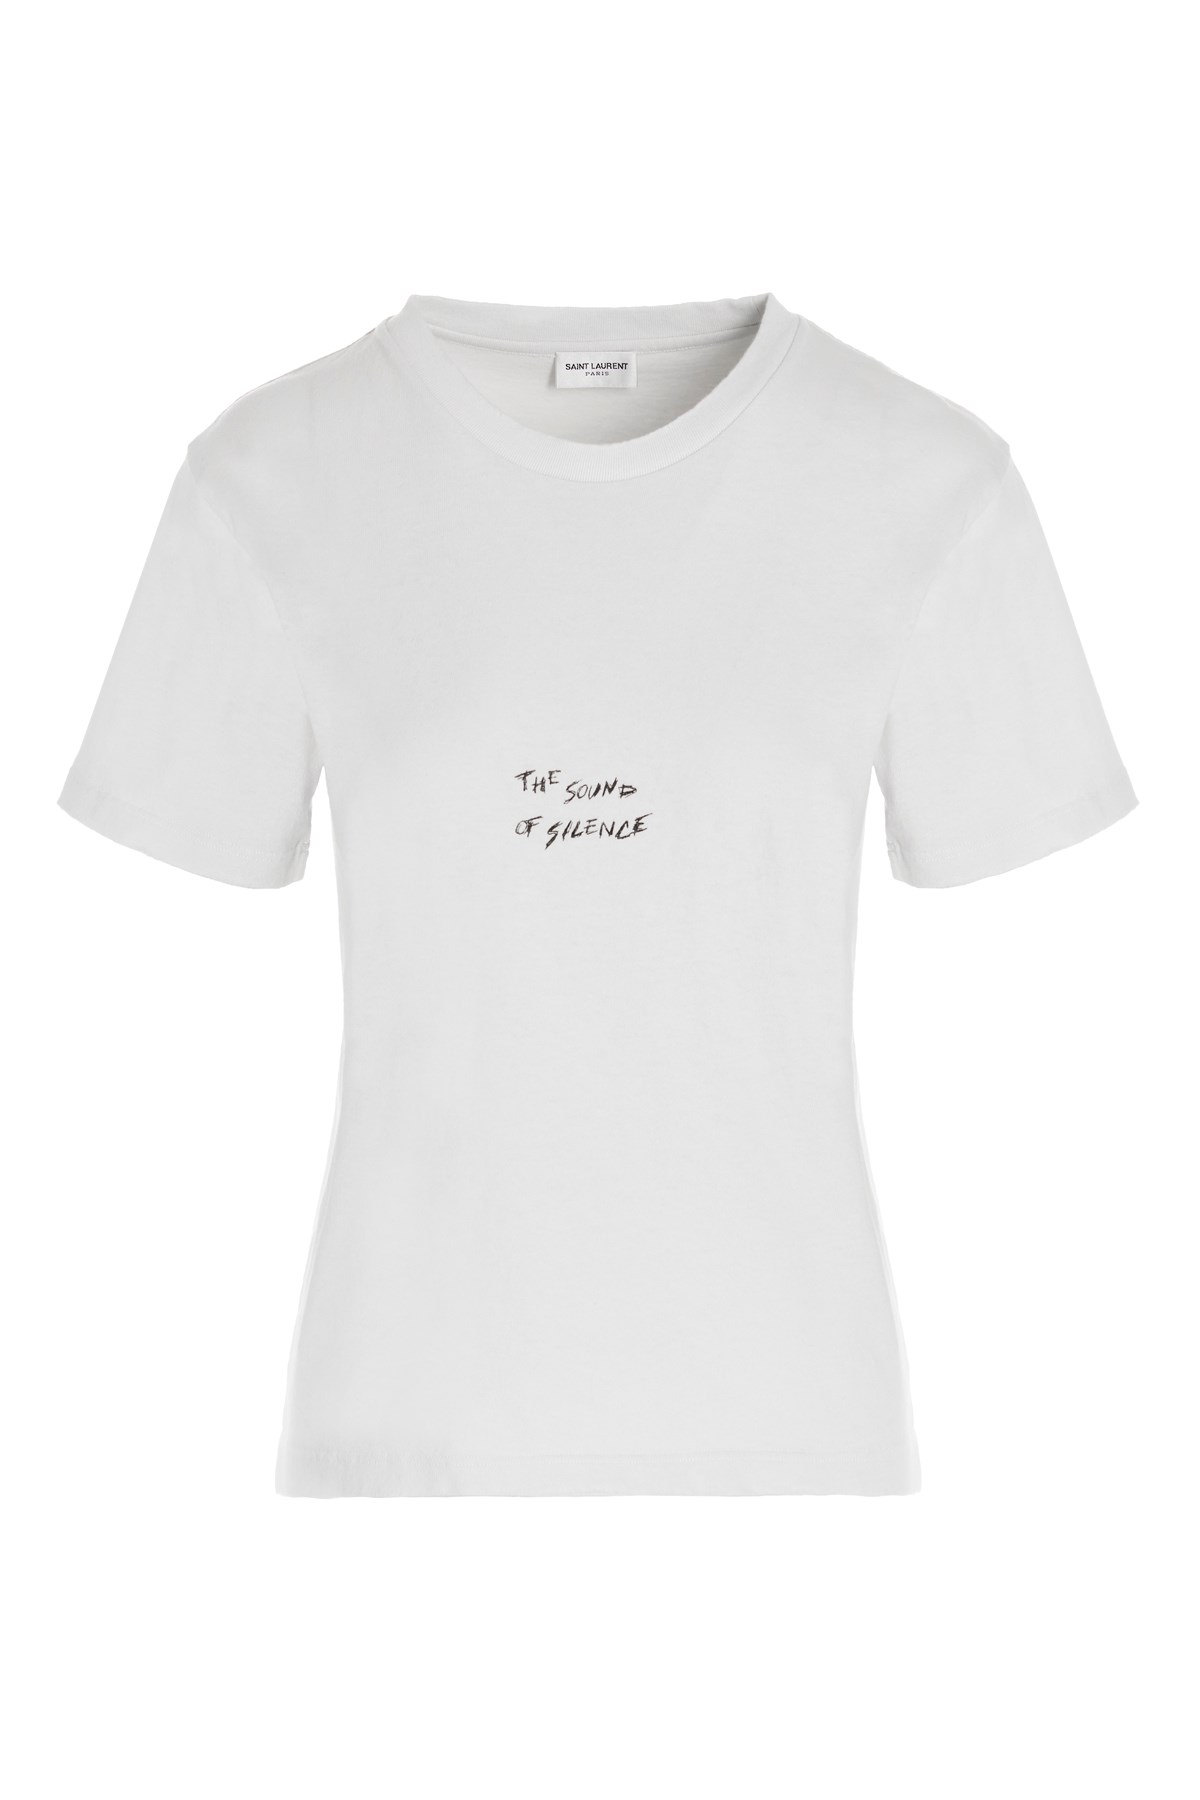 SAINT LAURENT T-Shirt 'The Sound Of Silence'